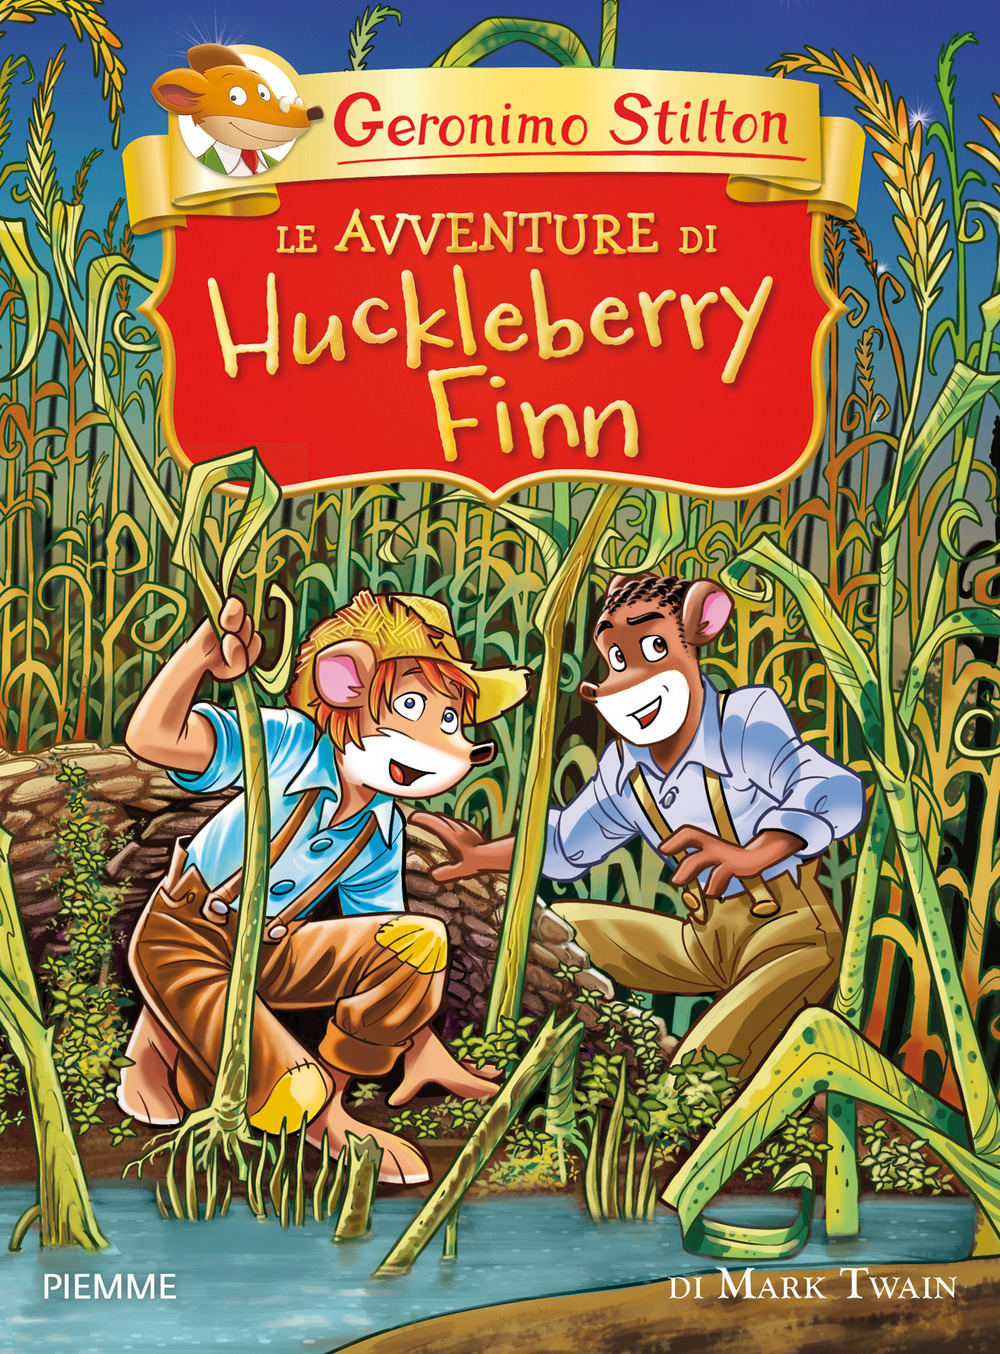 Le avventure di Huckleberry Finn di Mark Twain